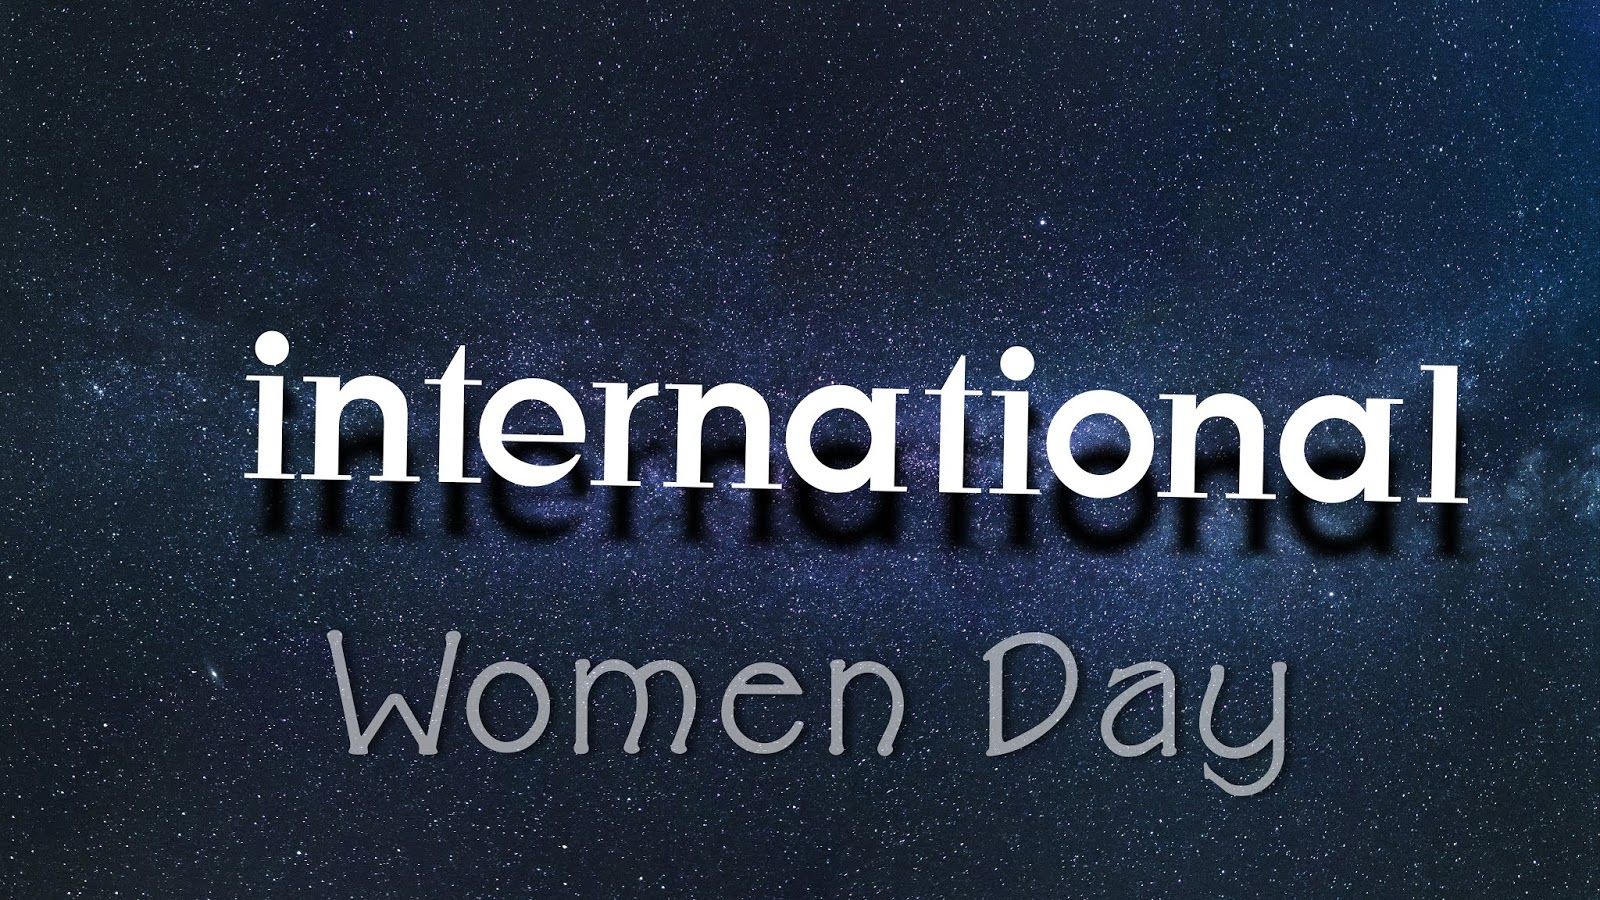 International women day image 2020. Women day wishing picture 2020